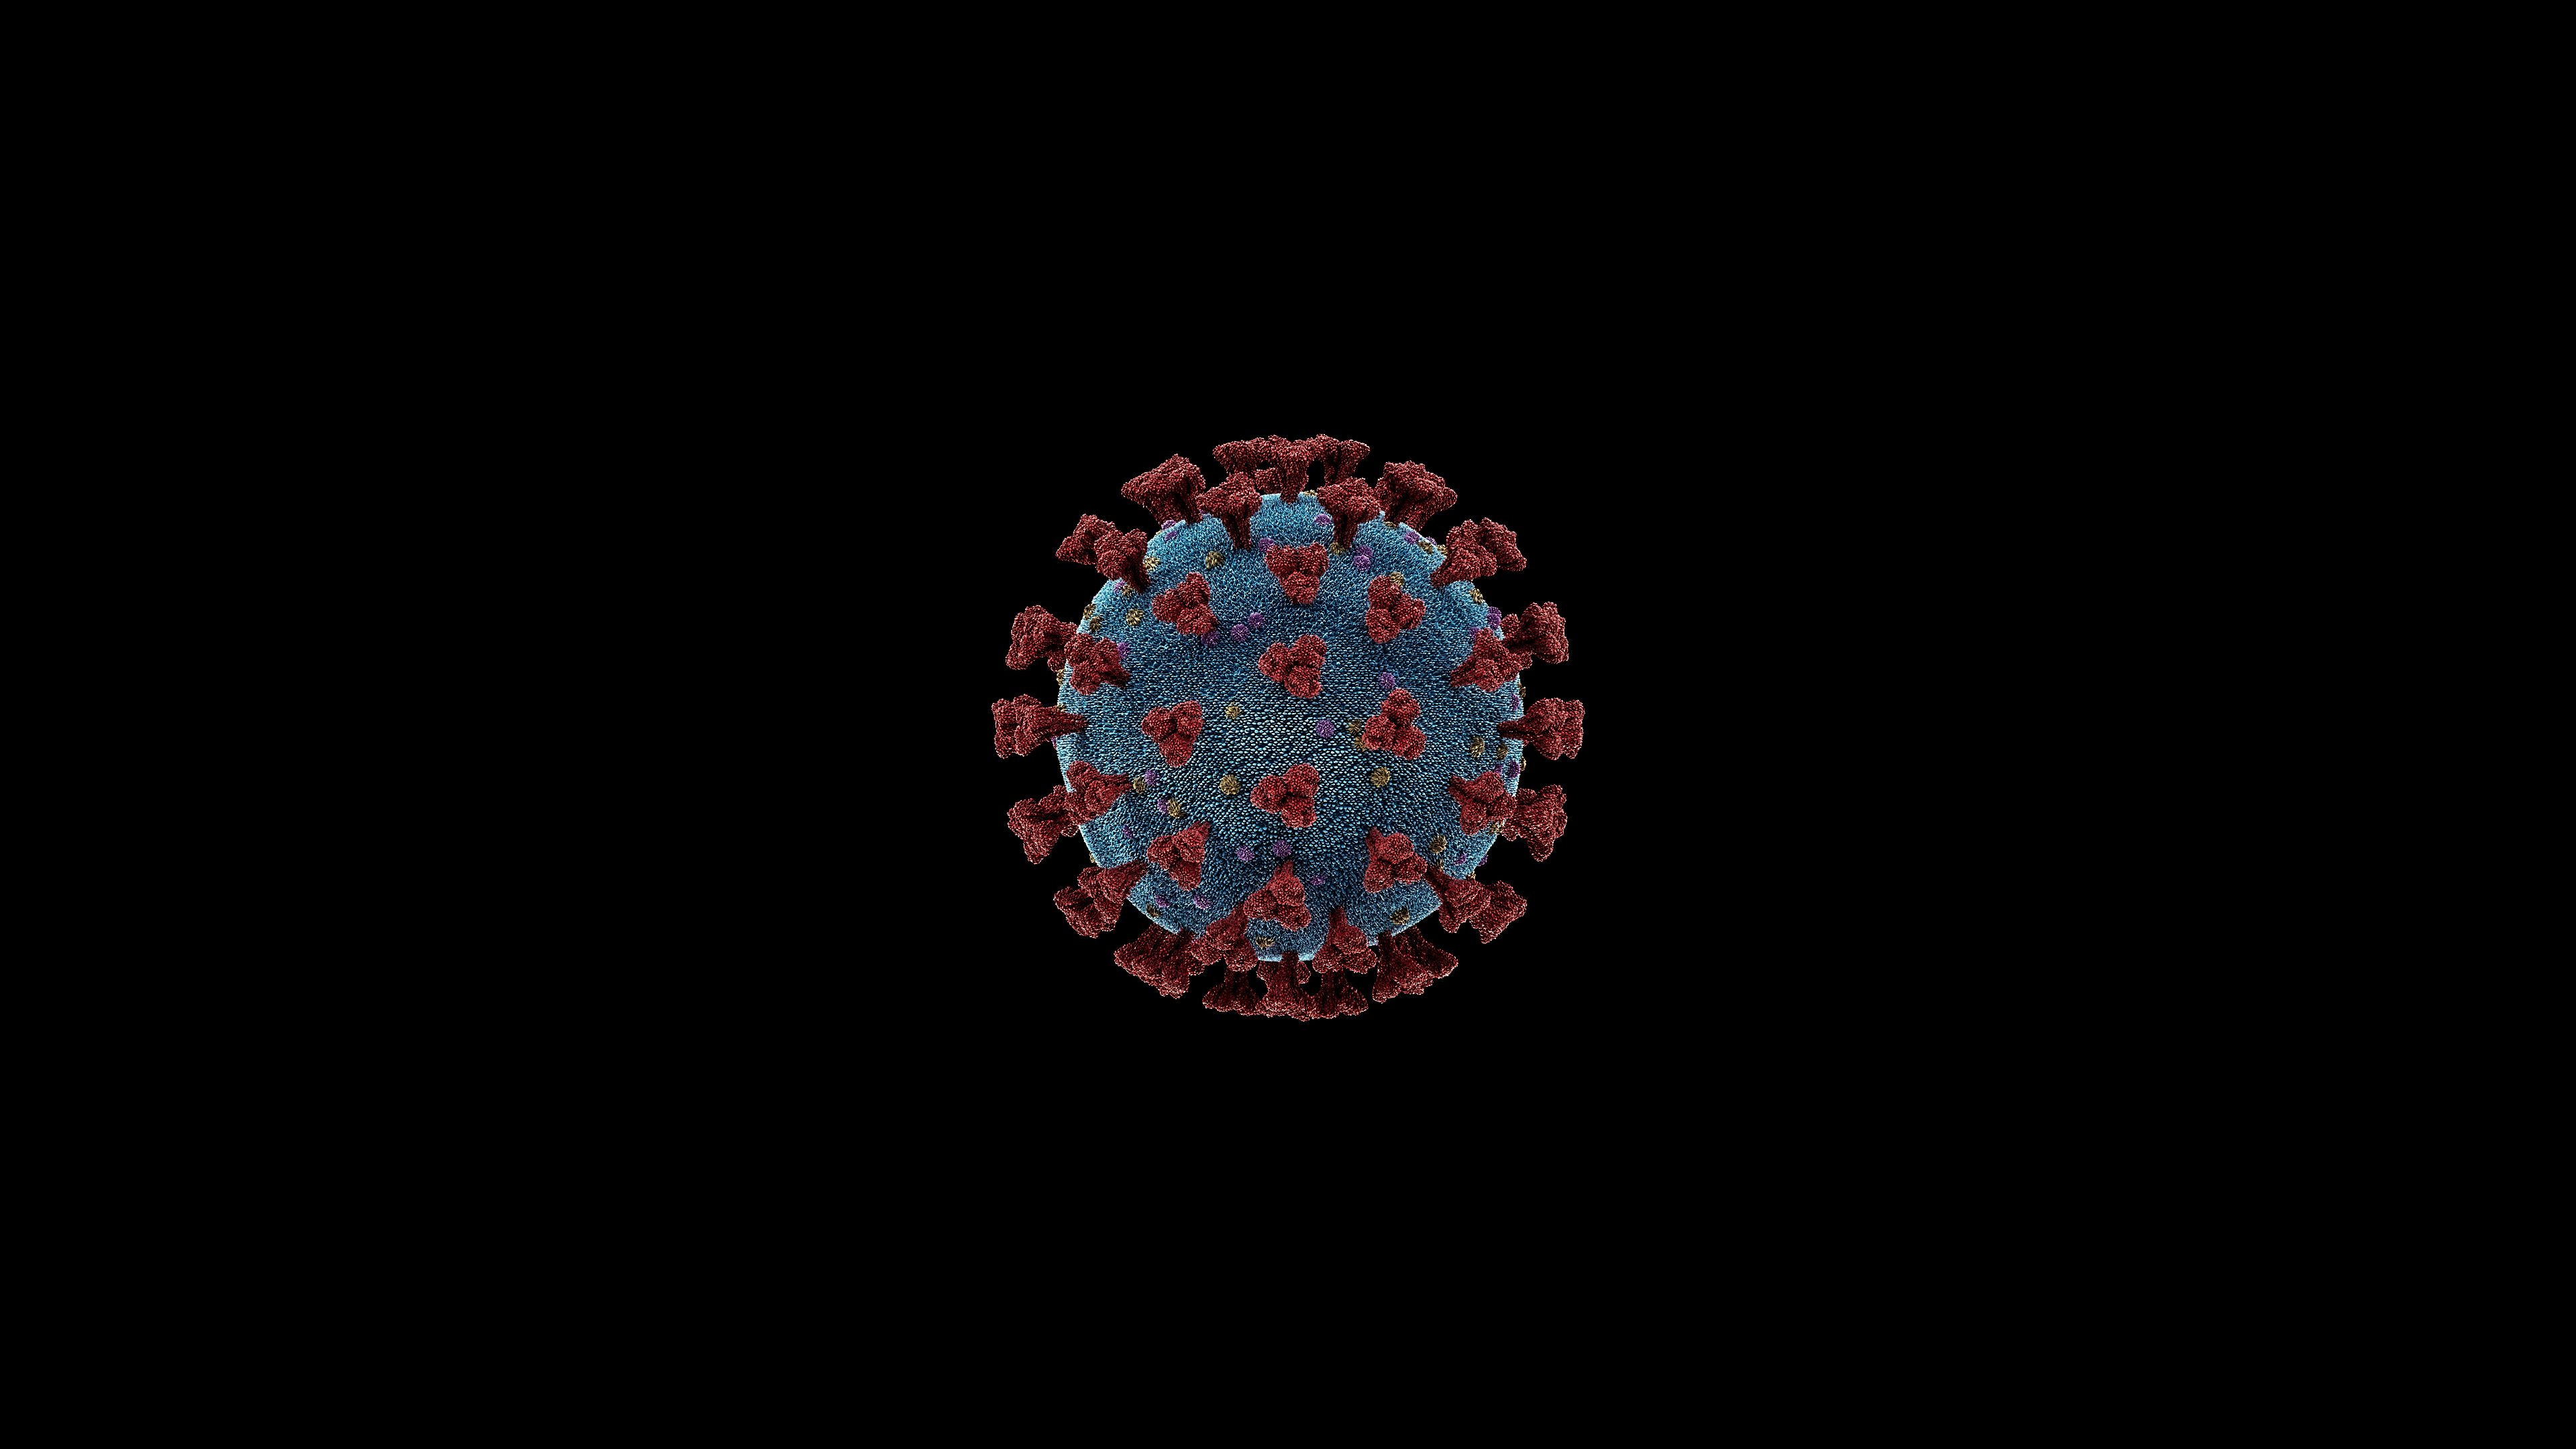 Coronavirus Covid 19 Wallpaper, HD Abstract 4K Wallpaper, Image, Photo and Background